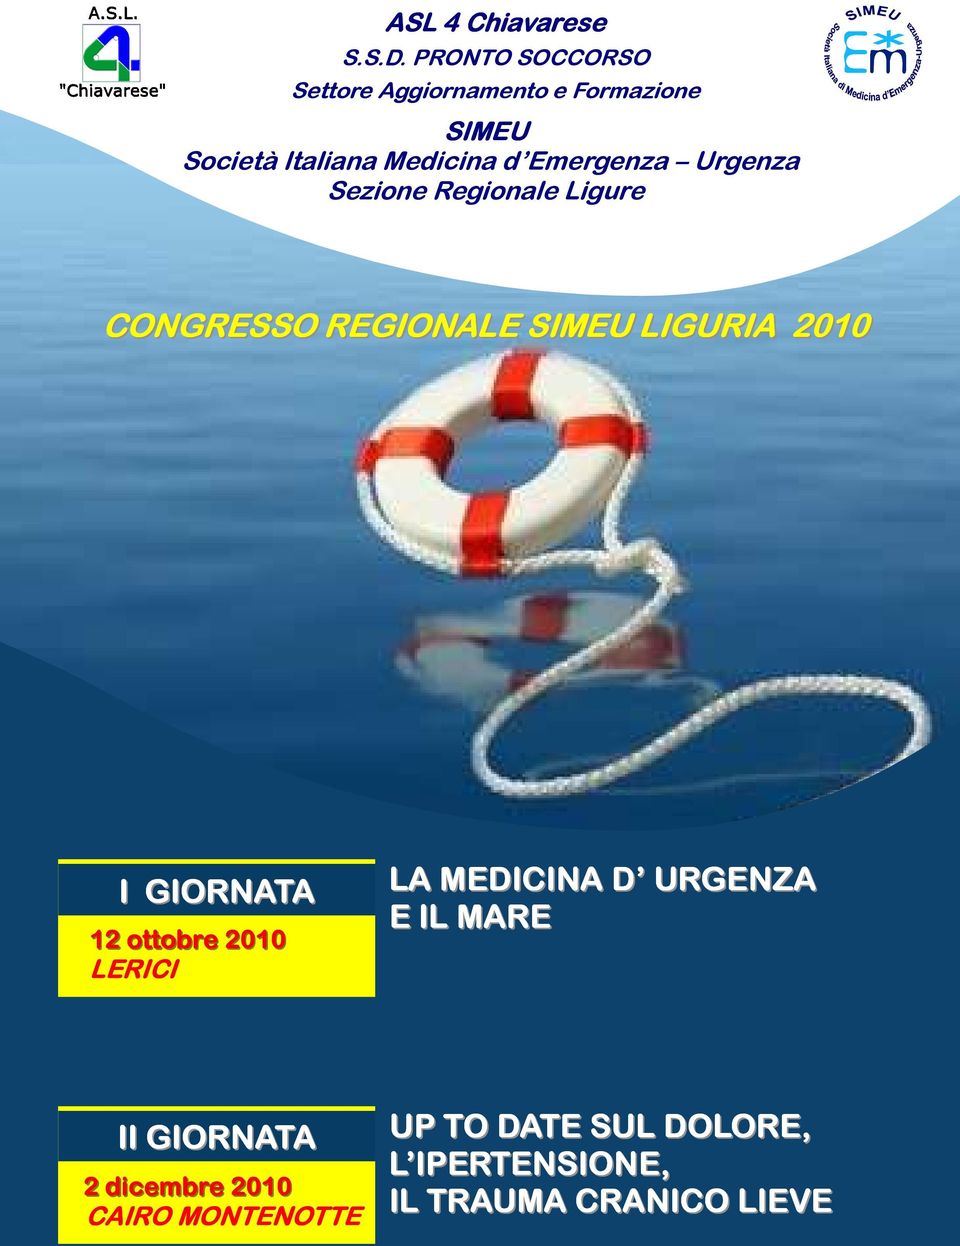 Italiana Medicina d Emergenza Urgenza Sezione Regionale Ligure I GIORNATA 12 ottobre 2010 LERICI